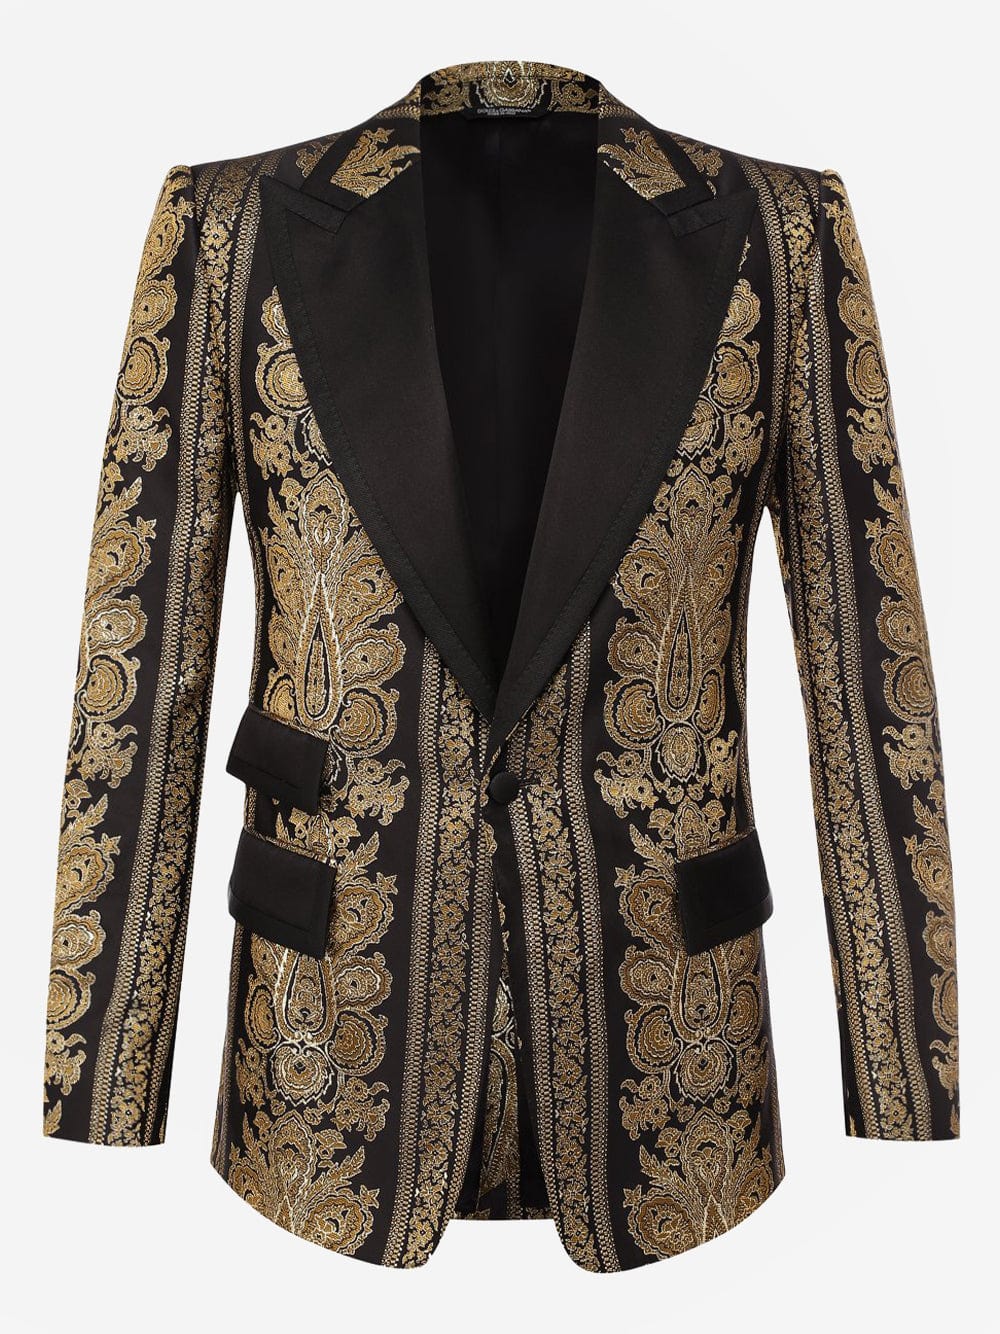 Dolce & Gabbana Jacquard Single-Breasted Blazer